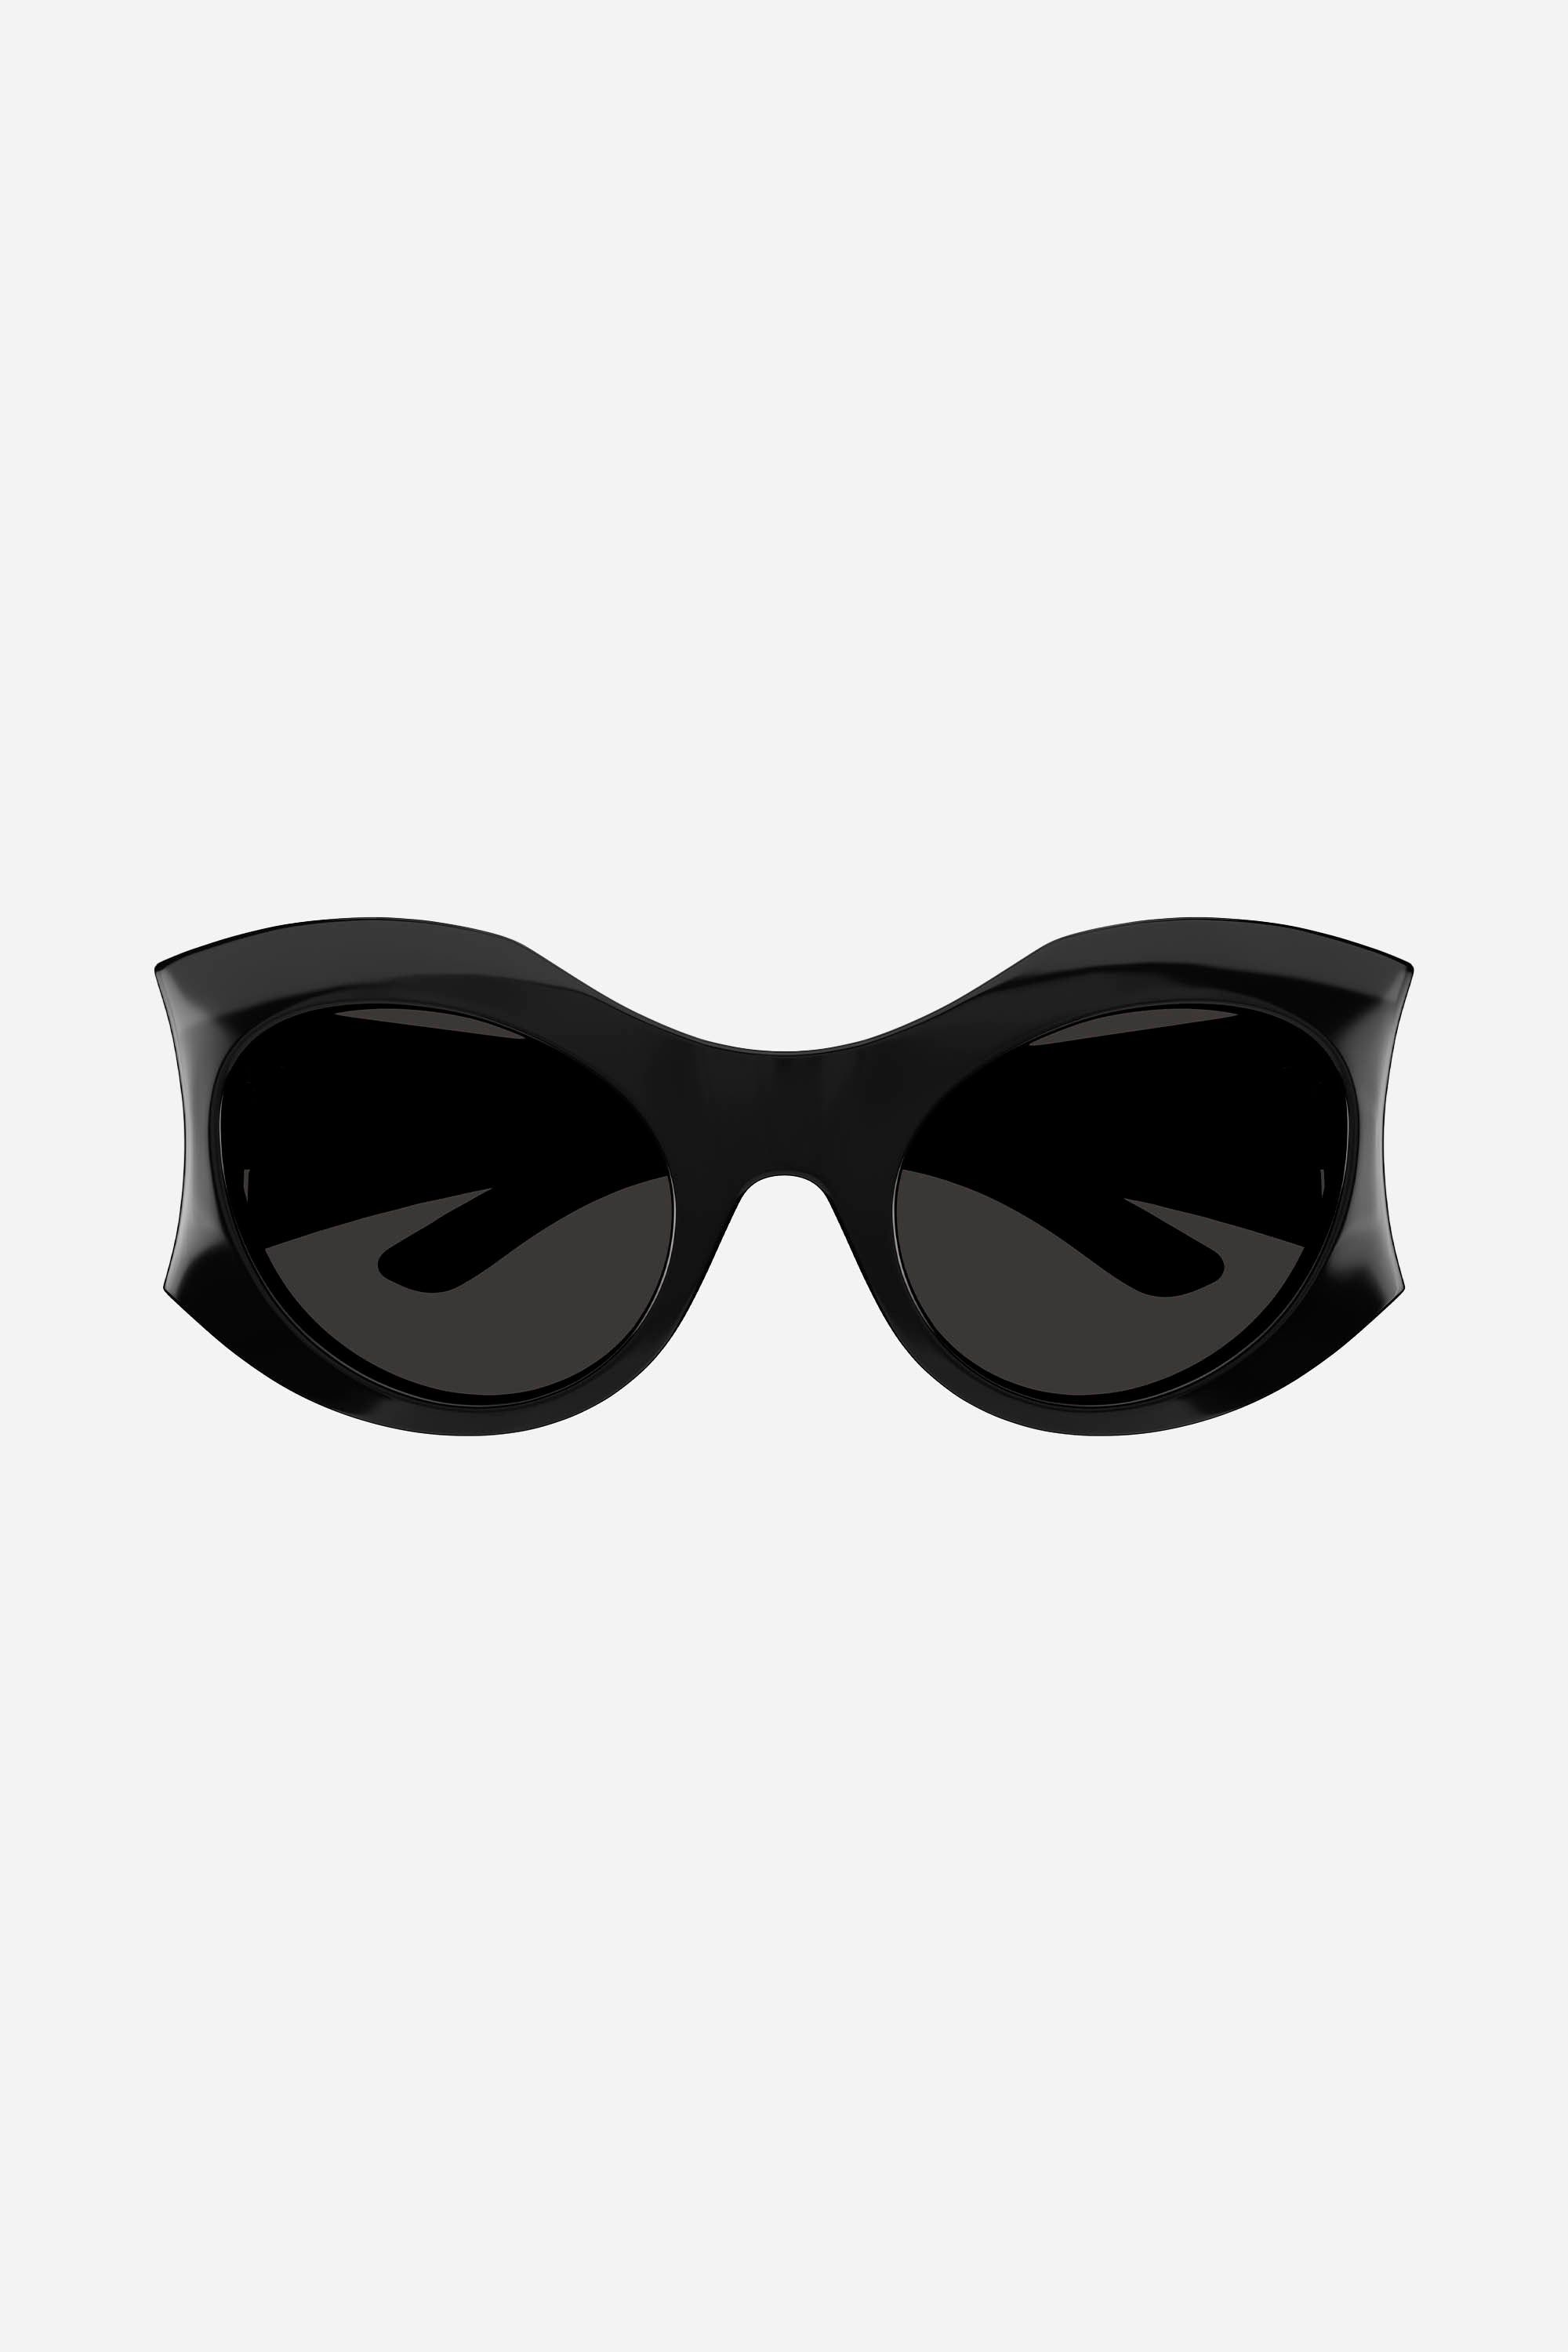 Balenciaga hourglass round sunglasses in black - Eyewear Club